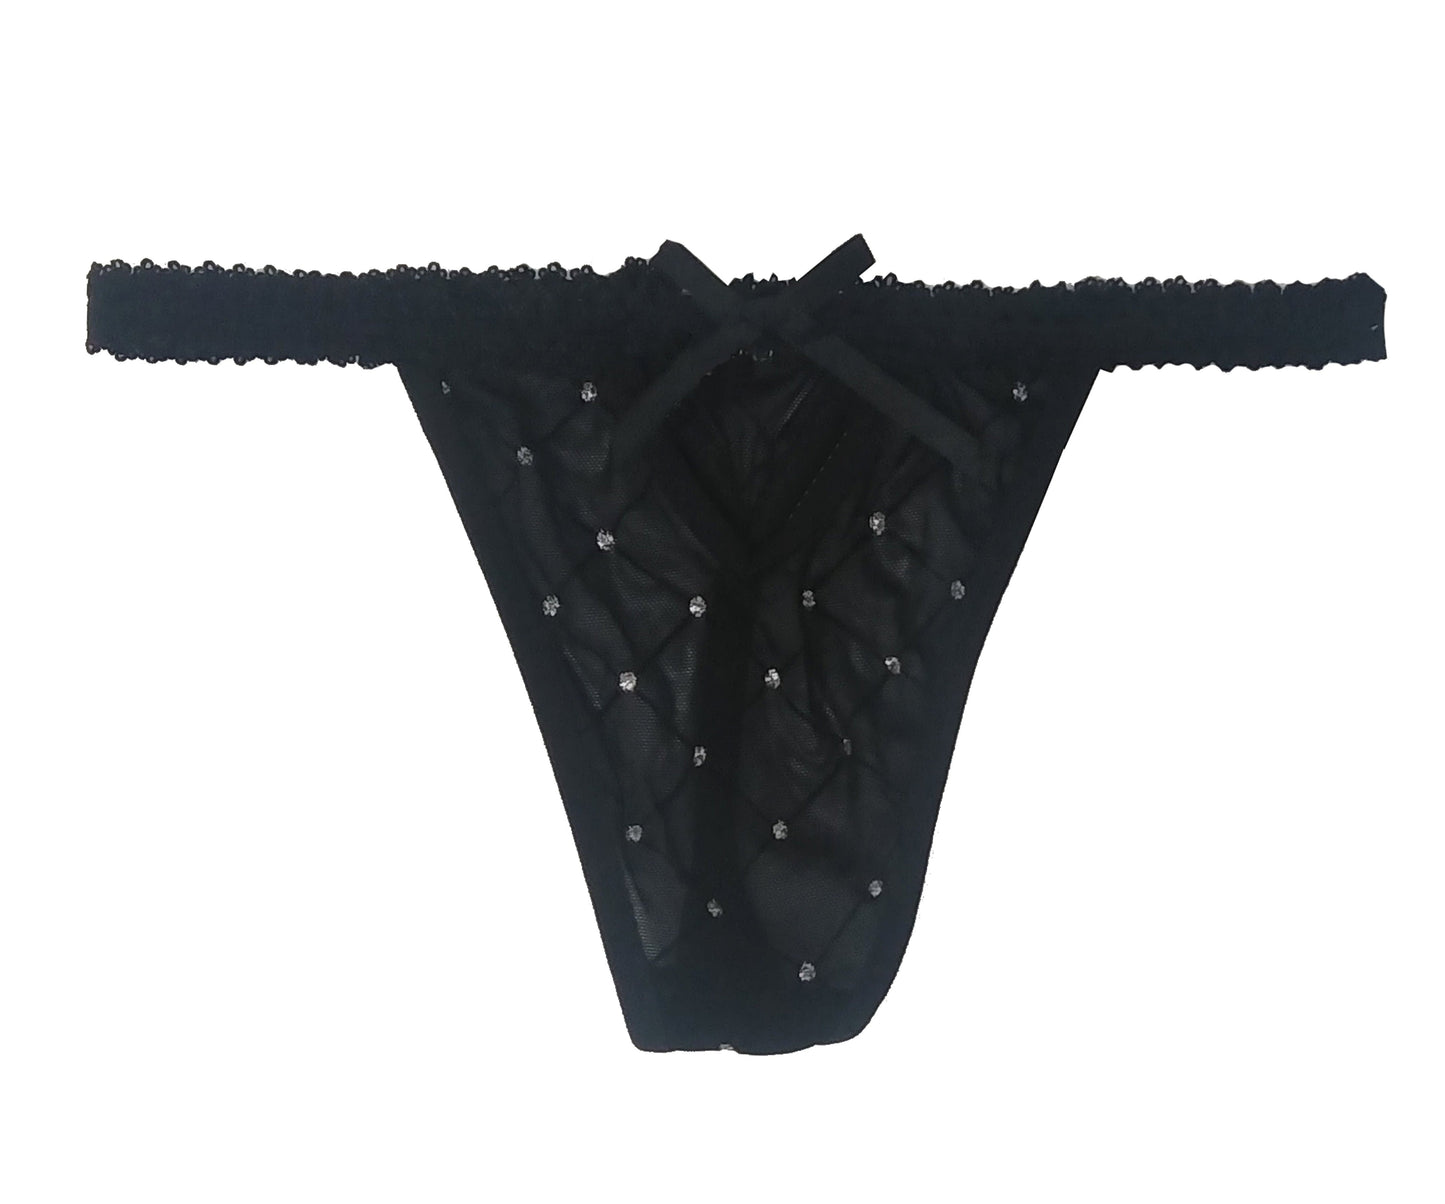 H & N womens underwear XL / Black G-String